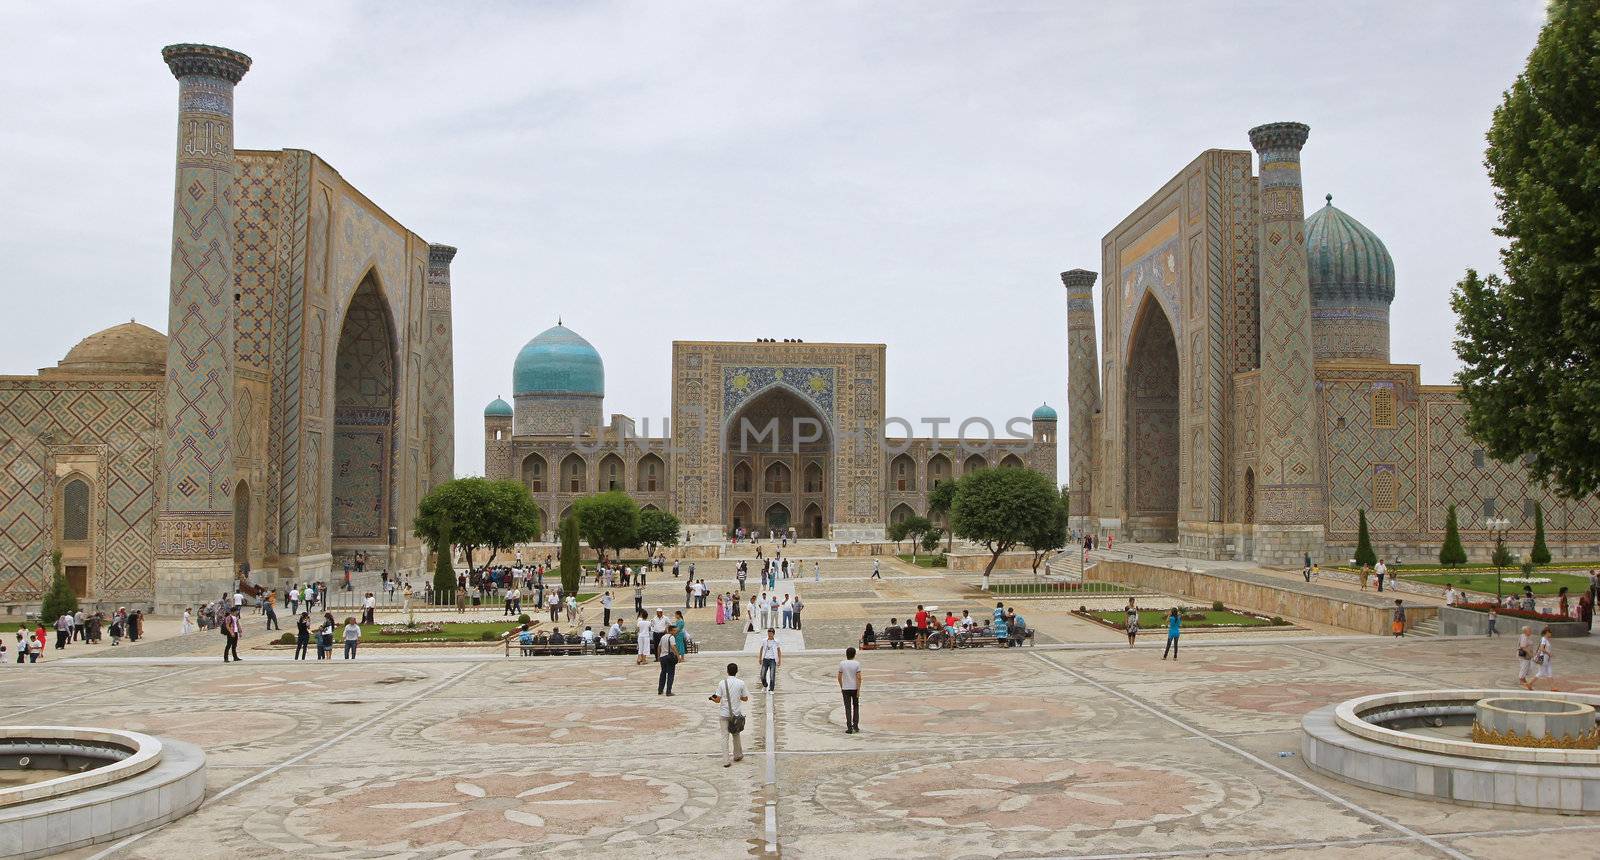 Registon Place, Samarkand, Uzbekistan by alfotokunst